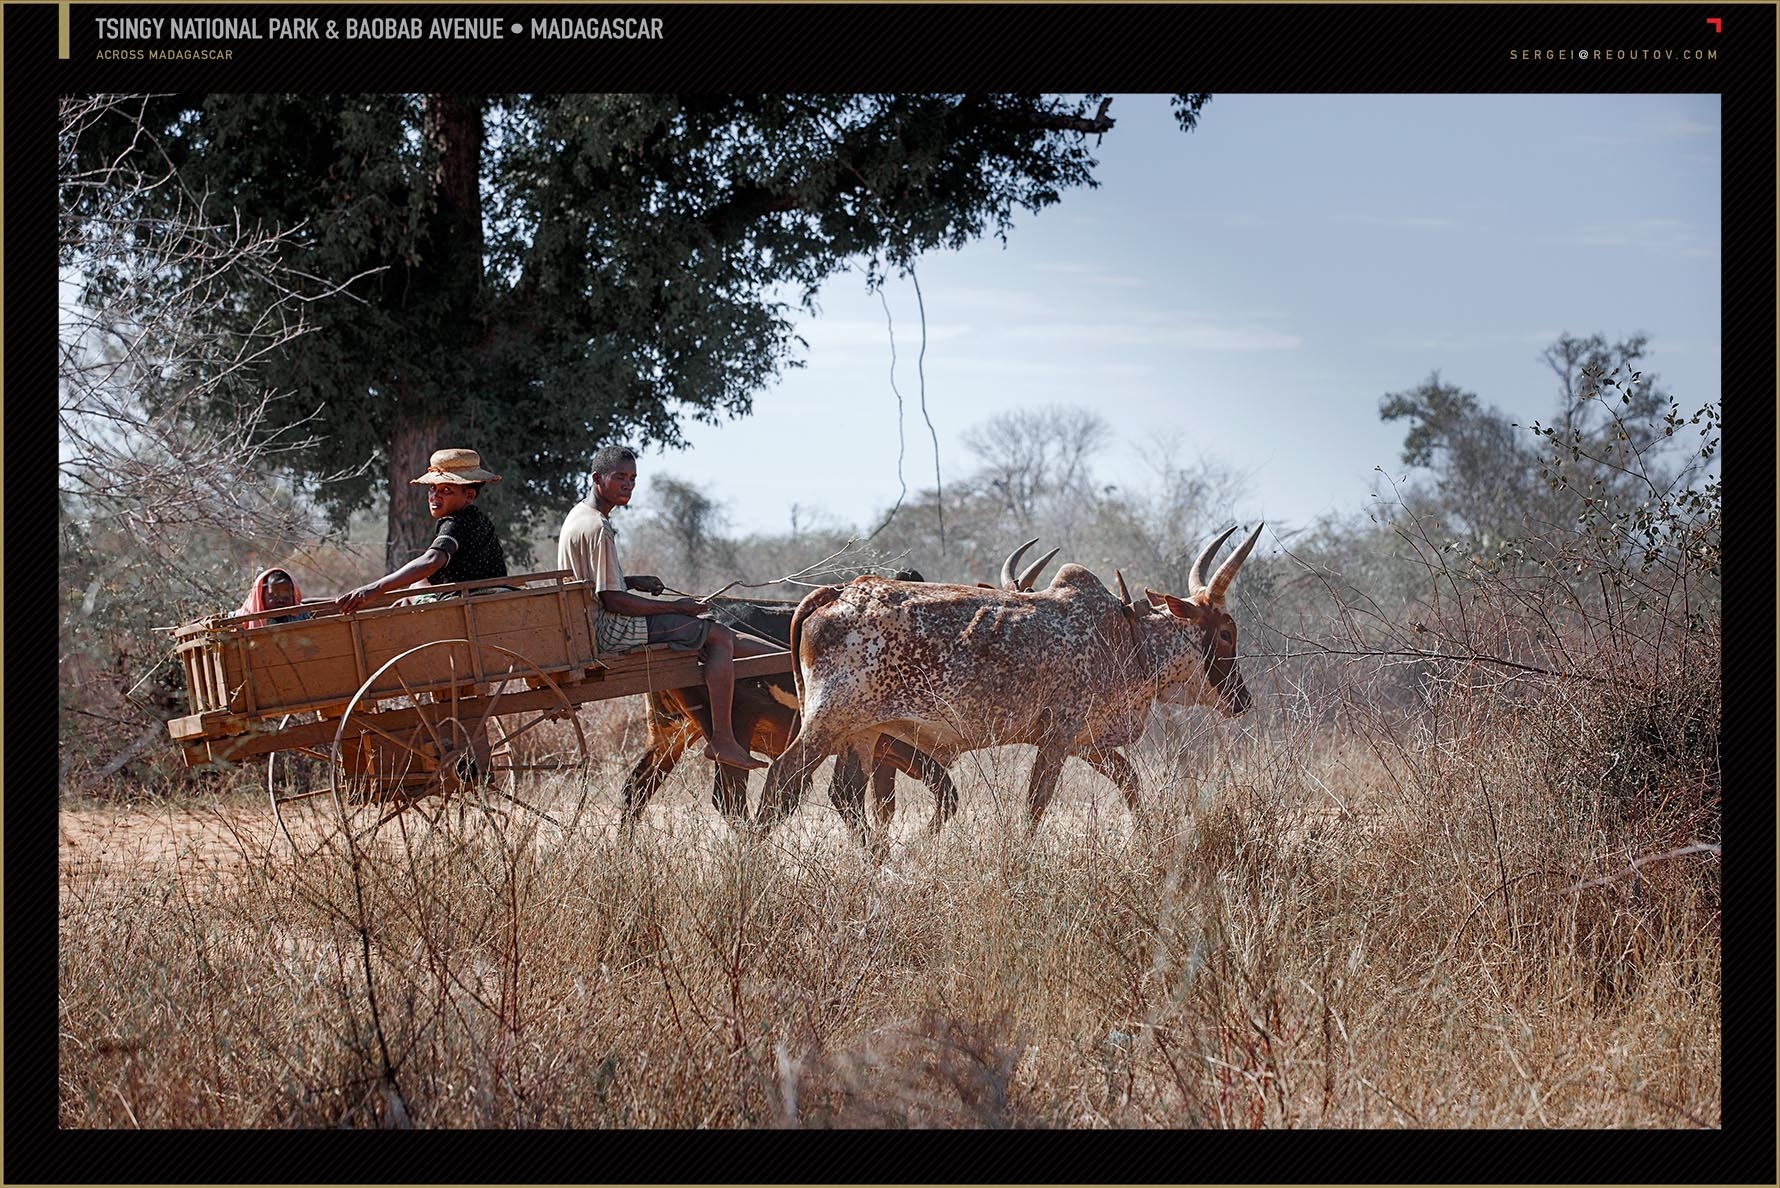 Ox cart in Madagascar